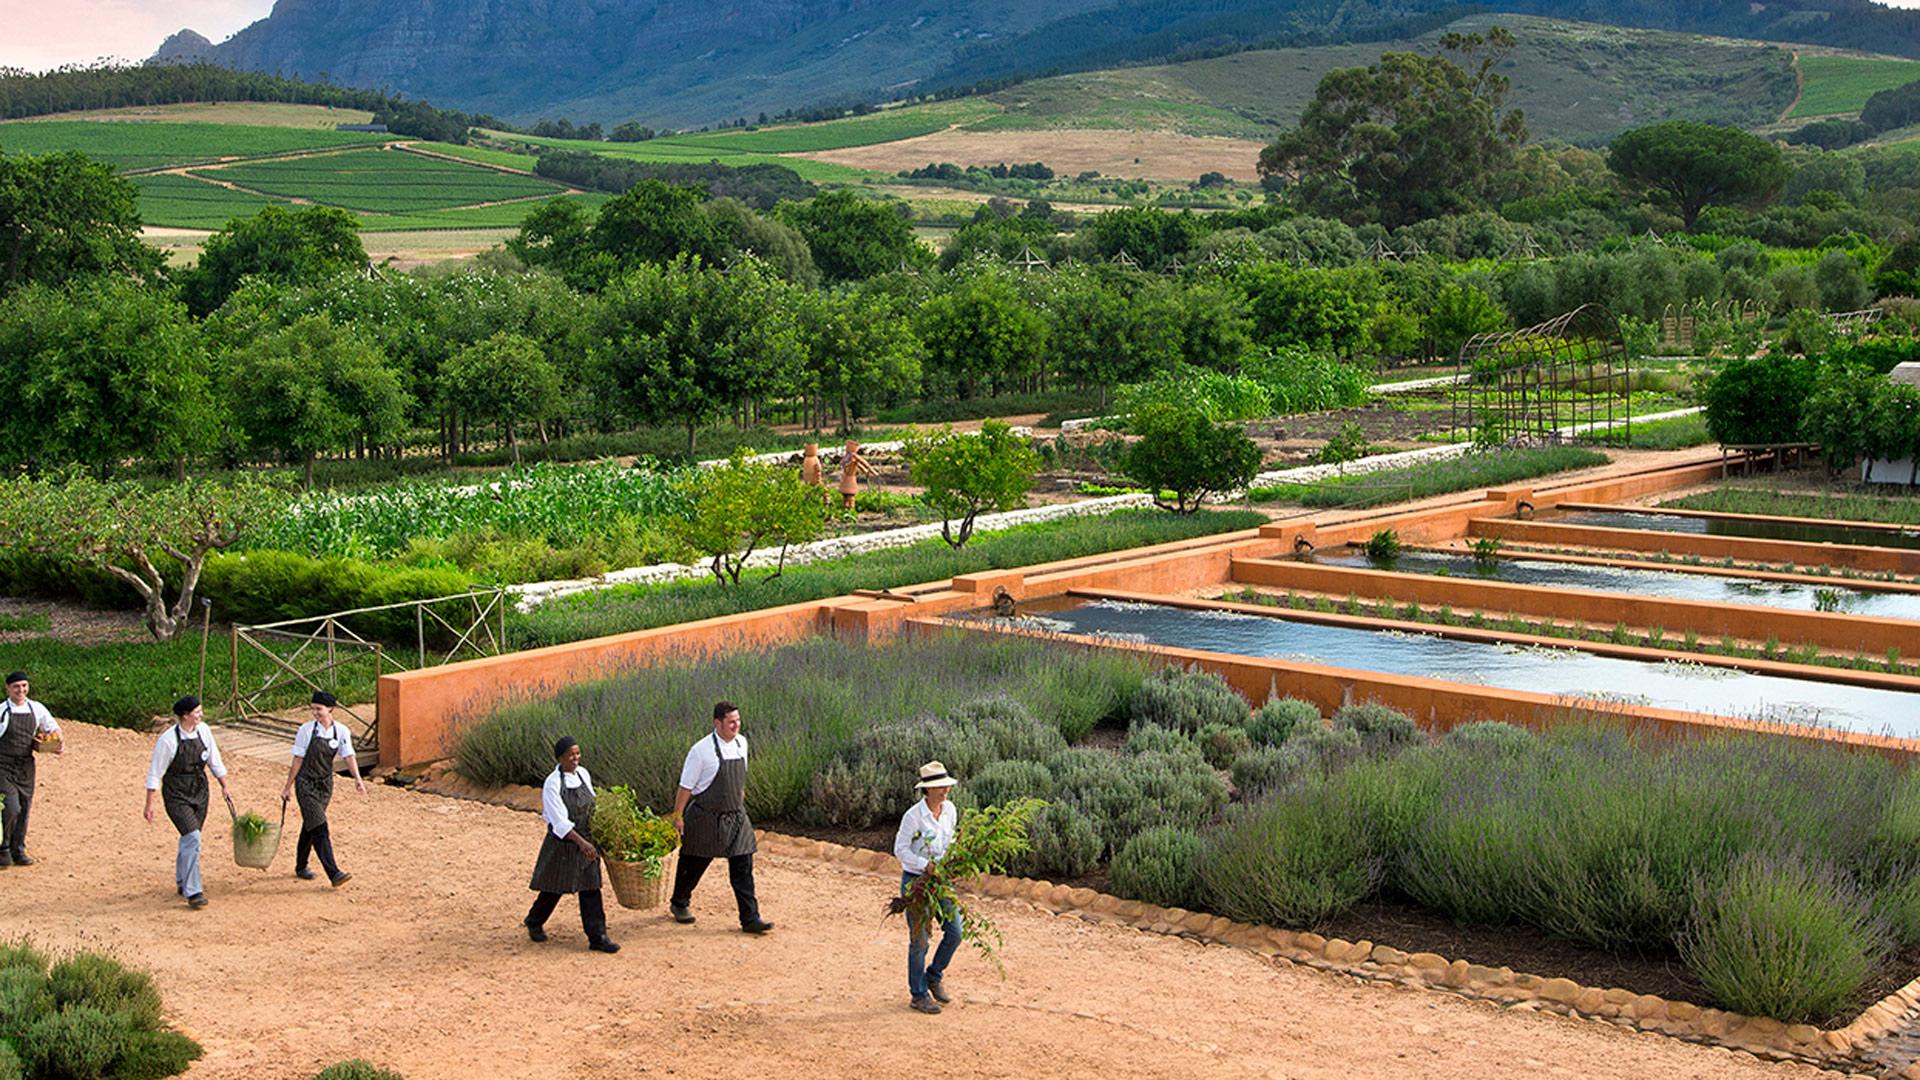 The Babylonstoren Garden in South Africa Is A True Delight For The Senses